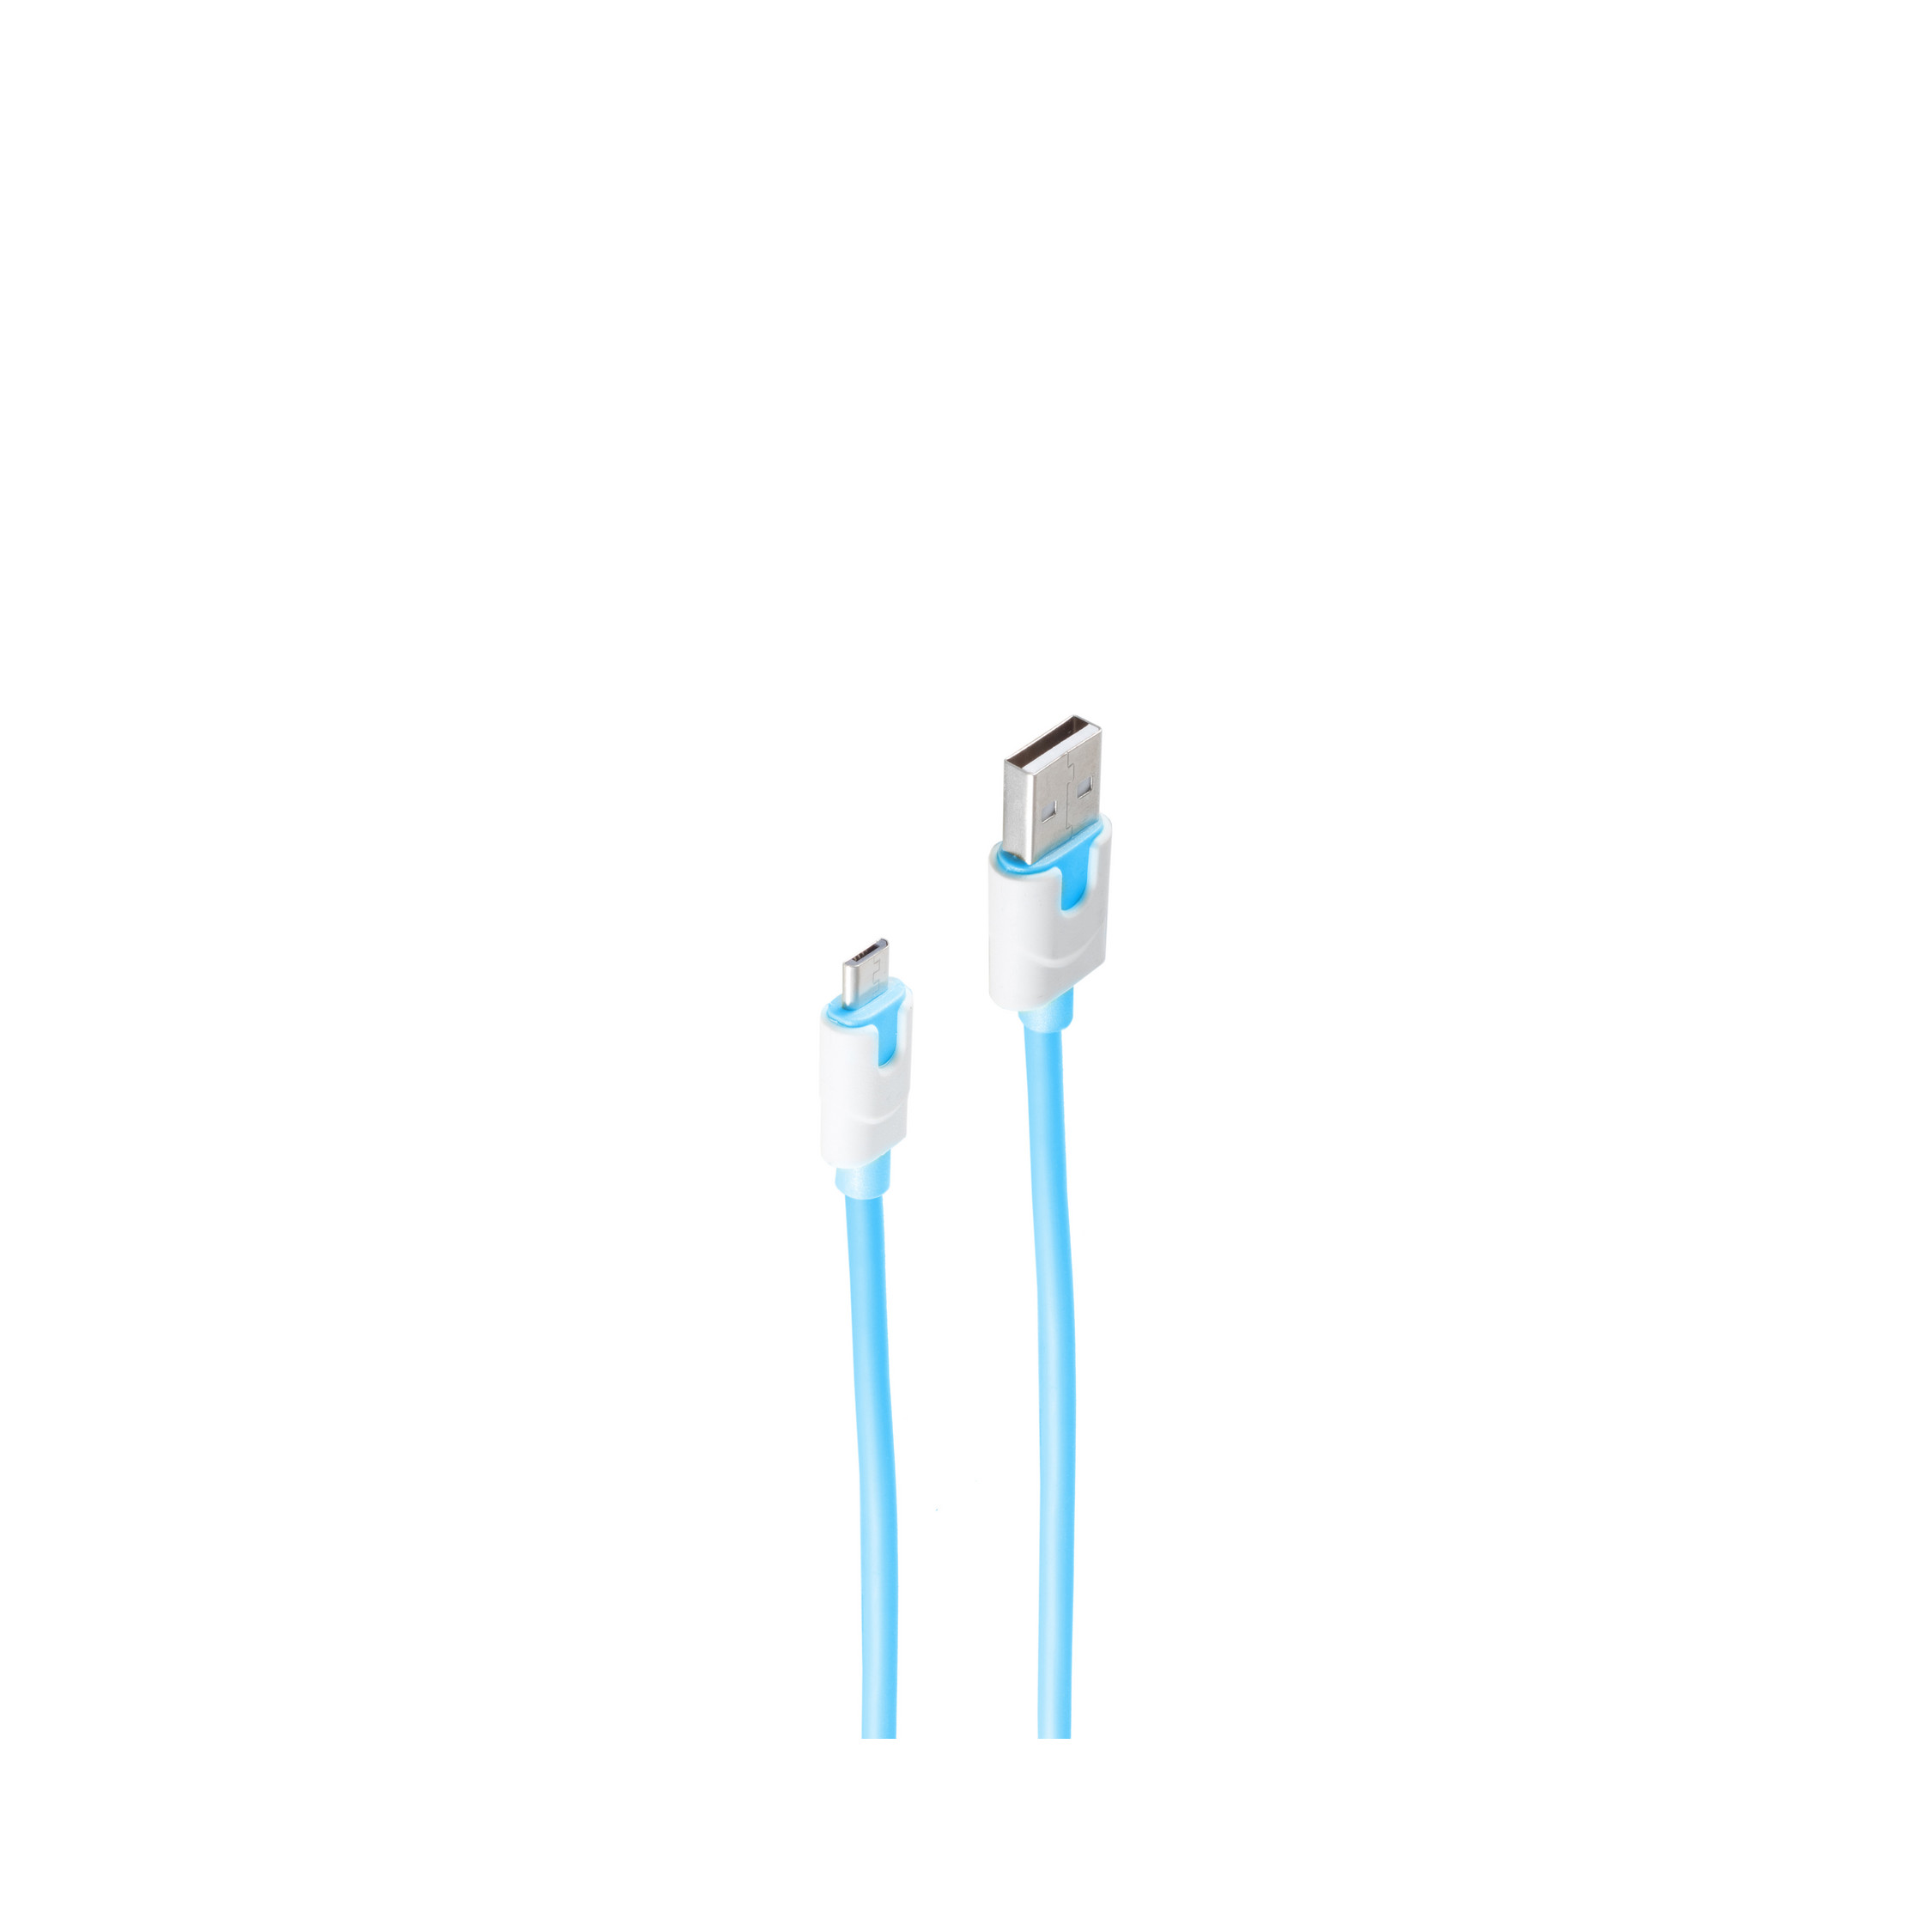 SHIVERPEAKS USB m, B, 0,3m, 0,3 Ladekabel, Micro USB-Ladekabel auf blau, Stecker blau A